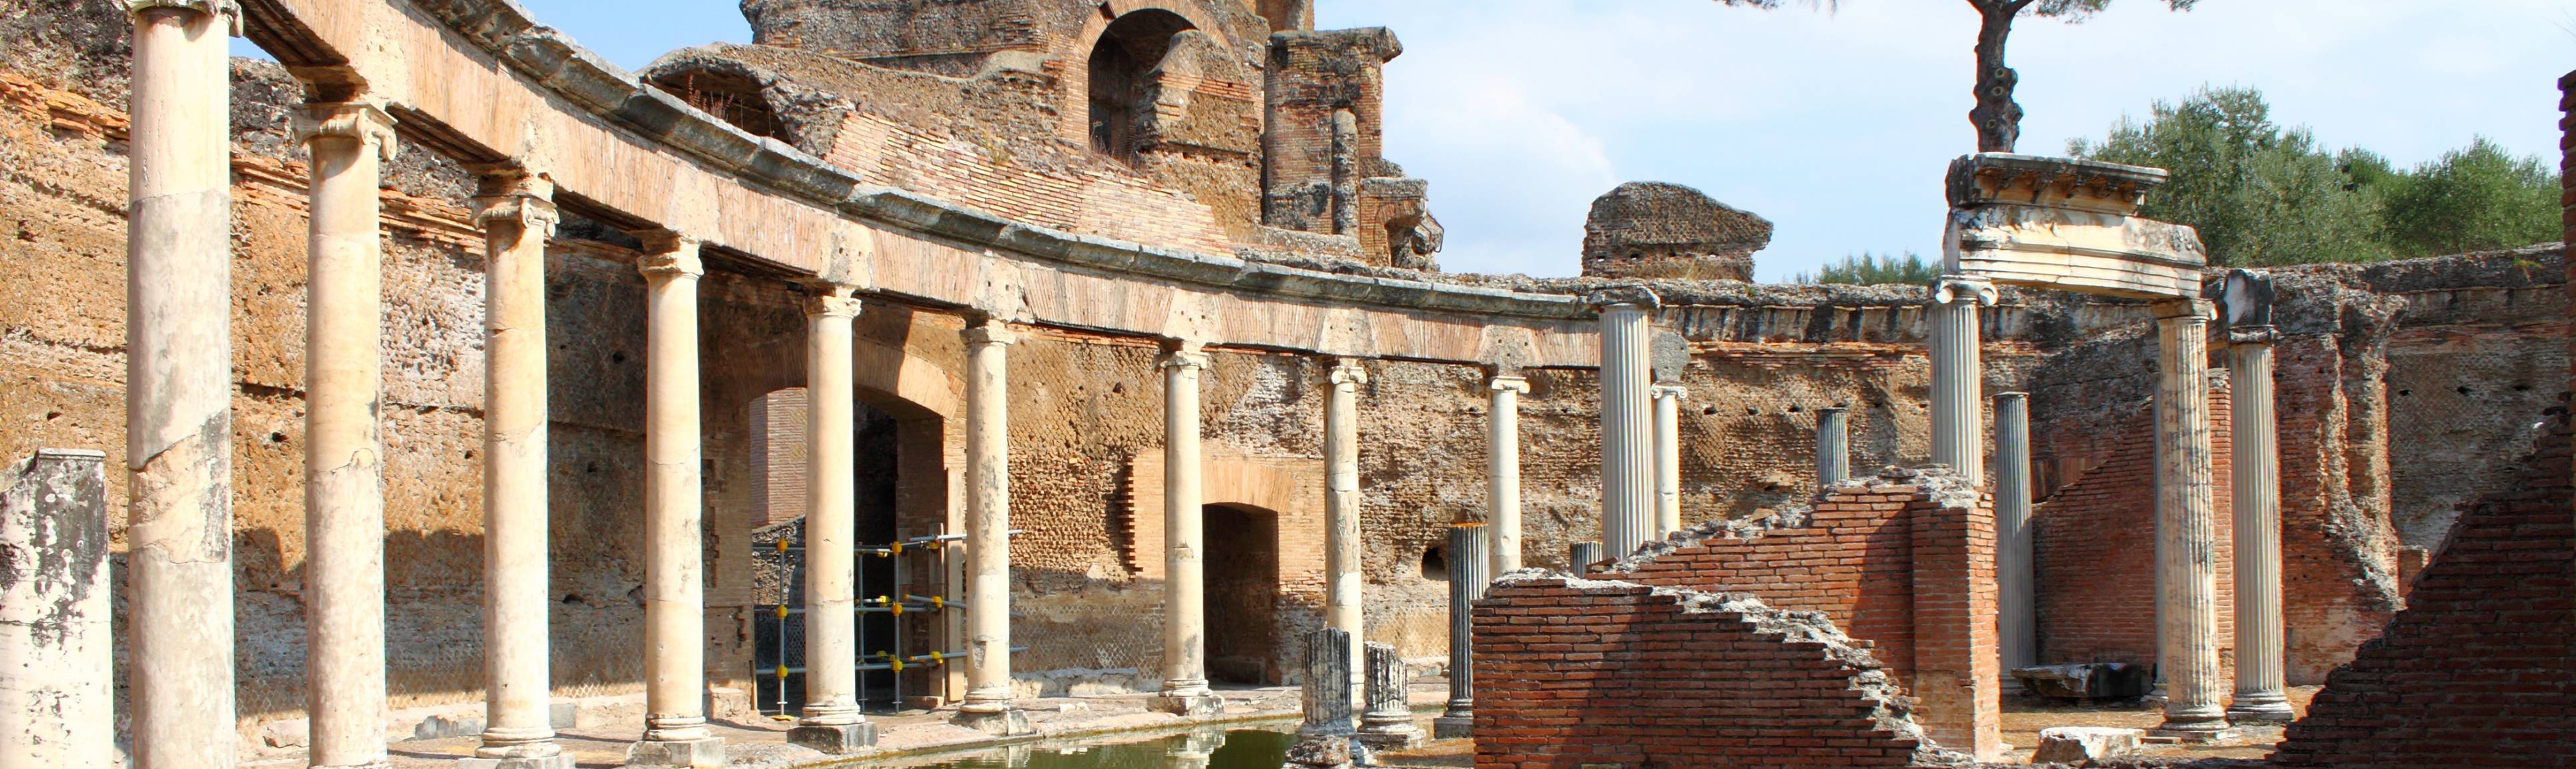 Columns surround Naval Theater at Hadrian's Villa near Rome